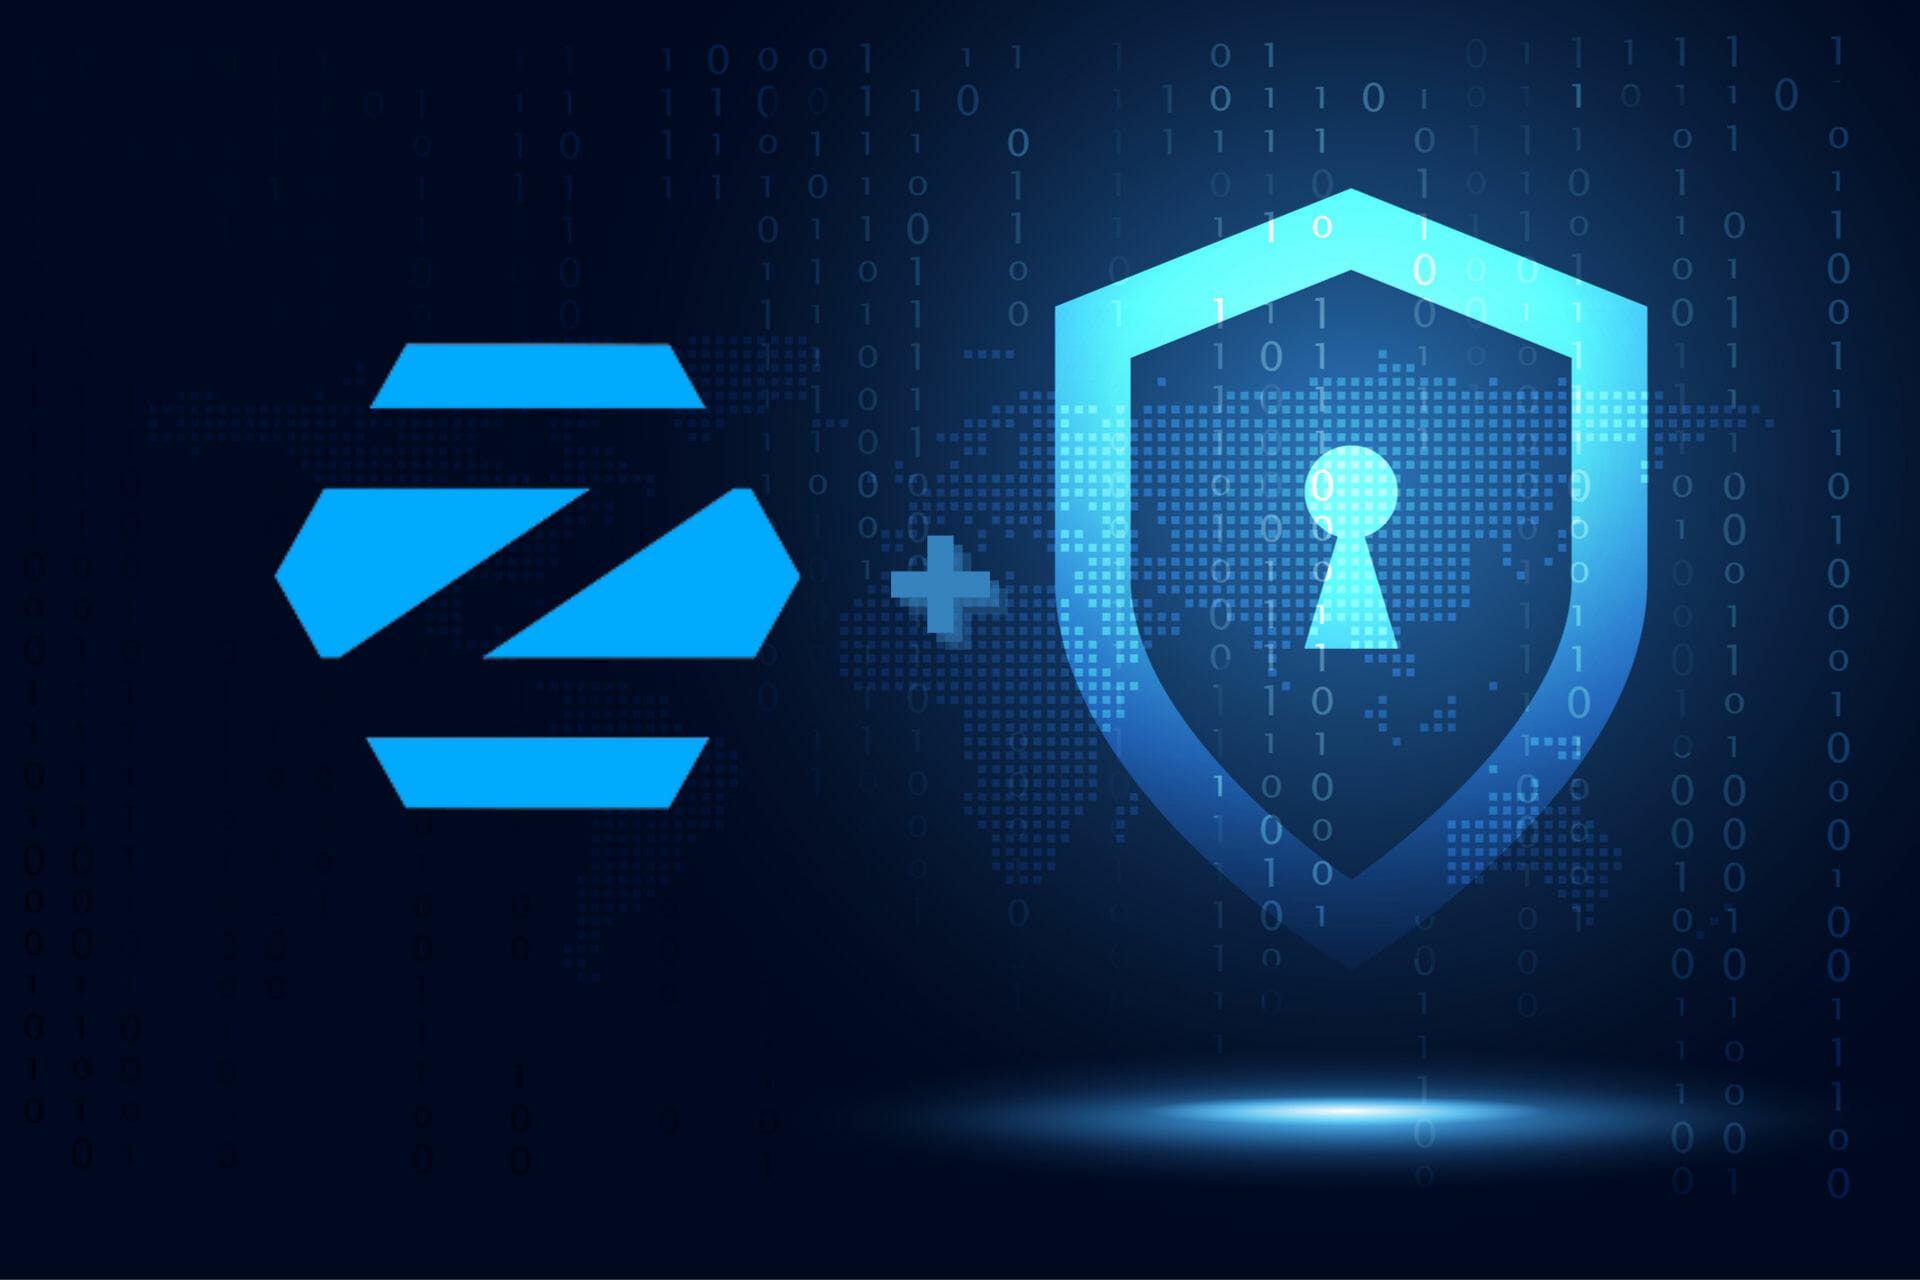 Does Zorin OS need antivirus?